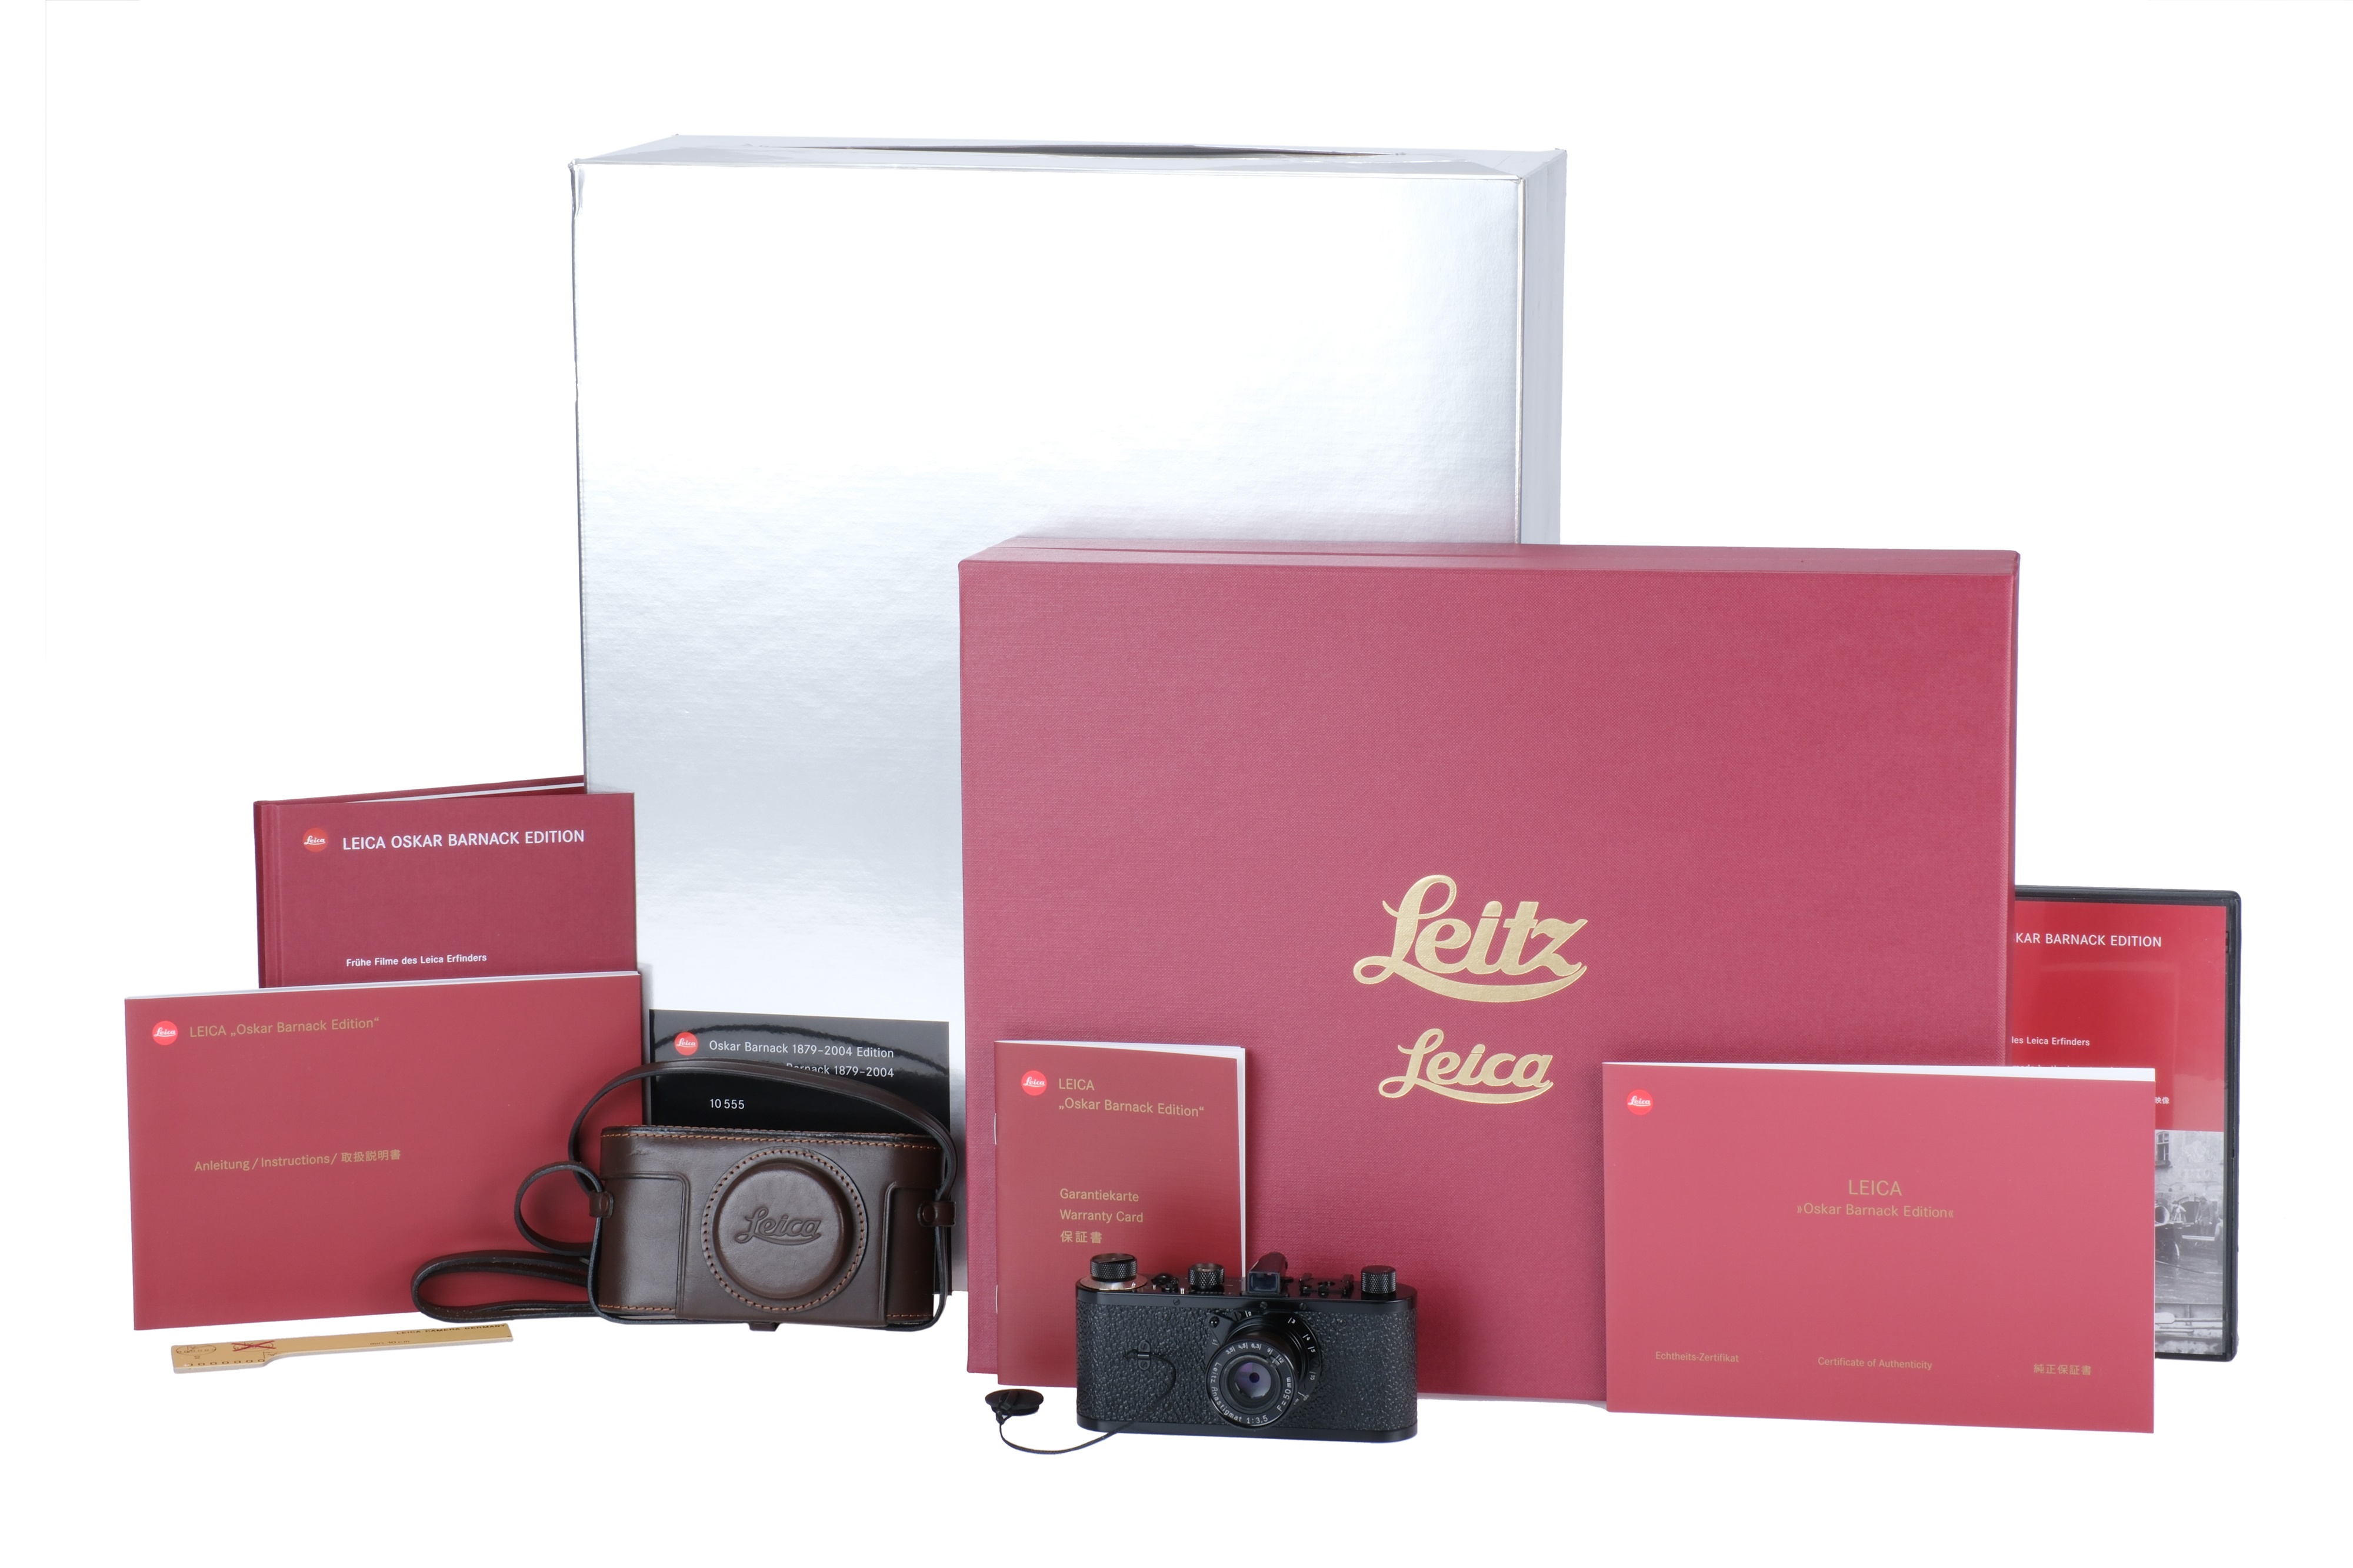 A Leica O-Series Oska Barnack 1879-2004 Edition Camera,